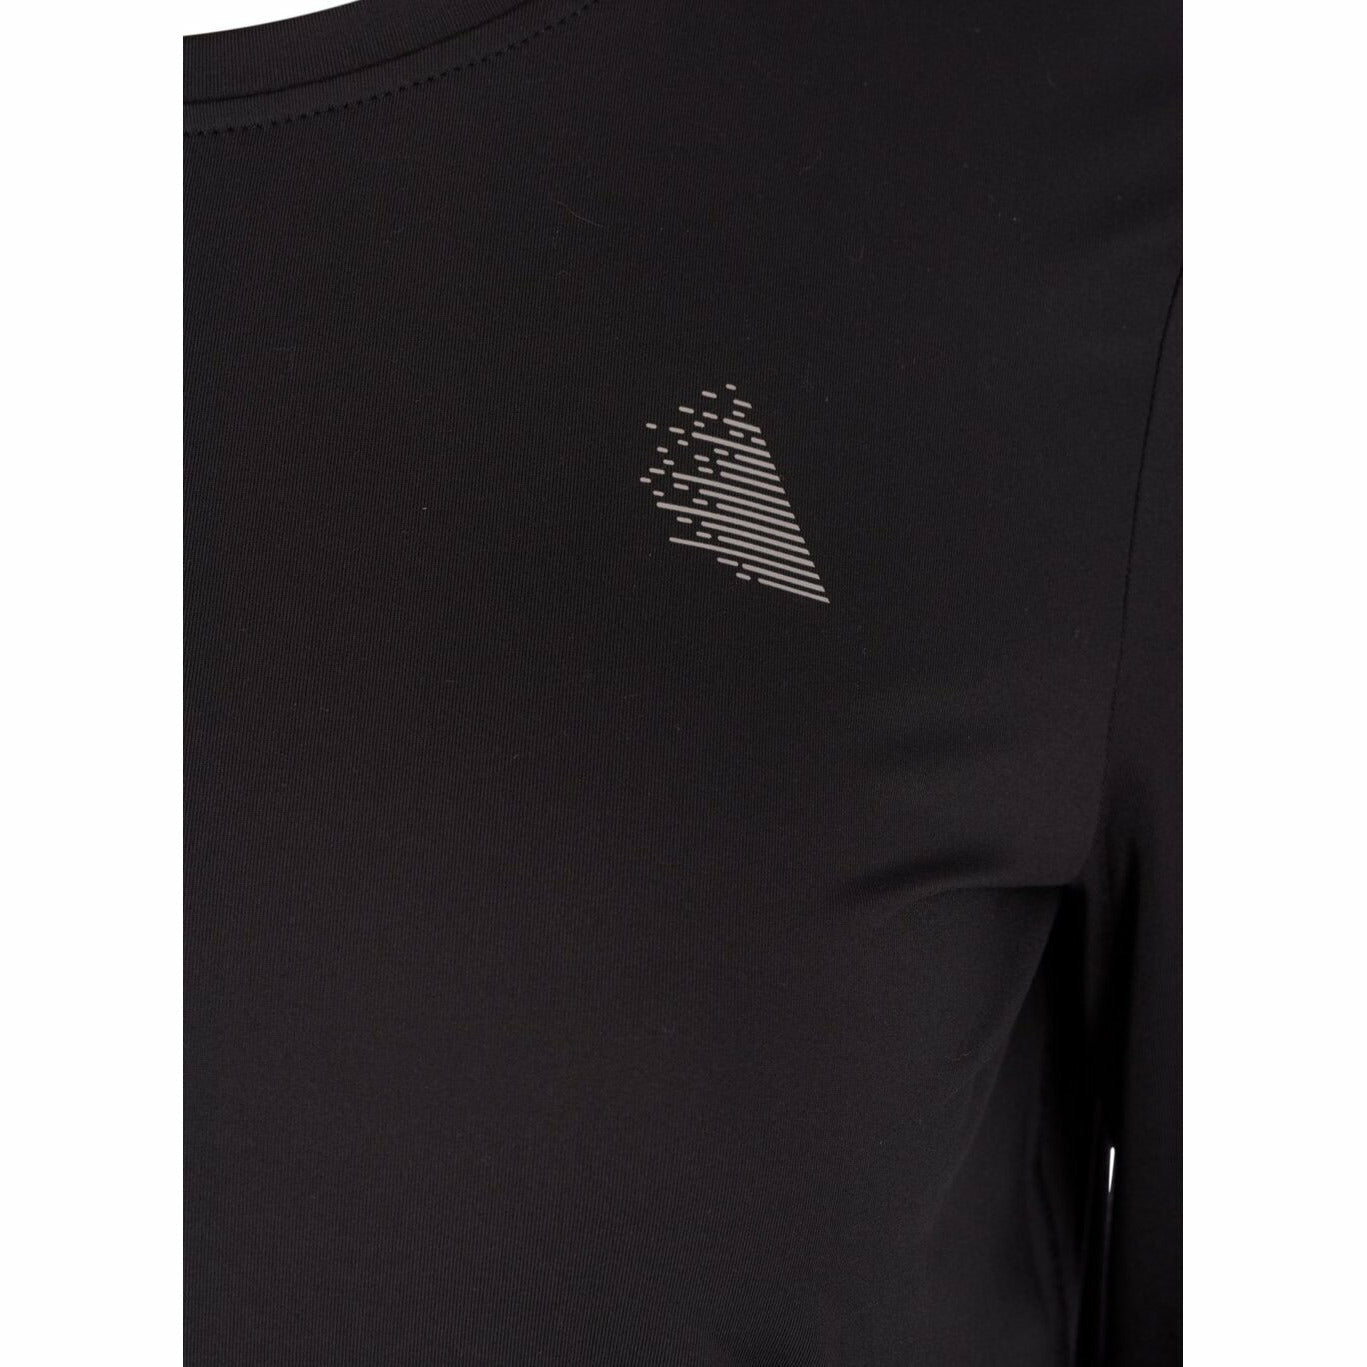 Zizzi Active Black Long Sleeve Top - Wardrobe Plus